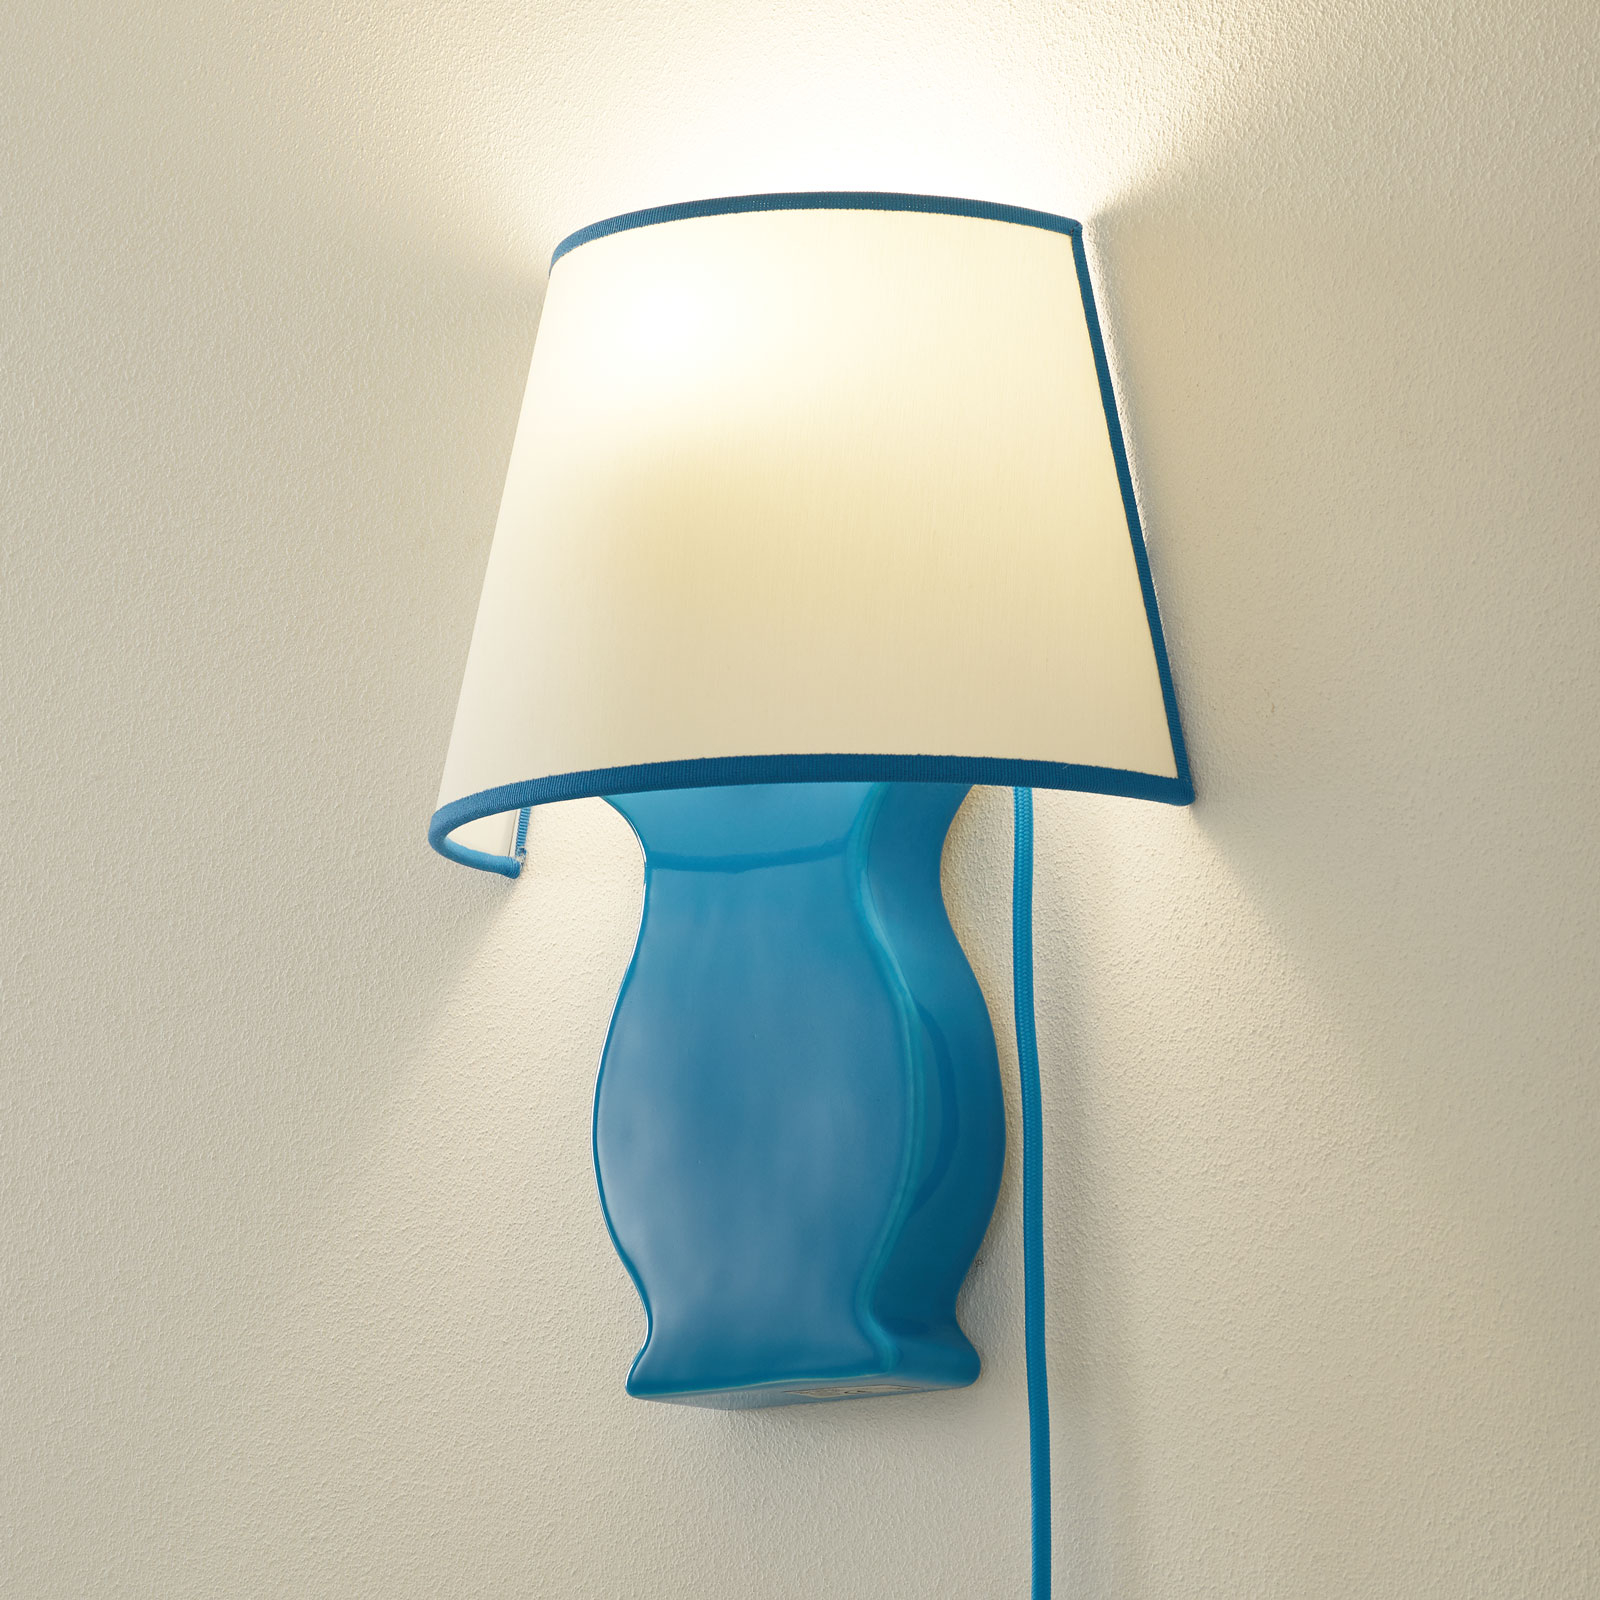 Ceramic wall light A184, with cloth shade, blue